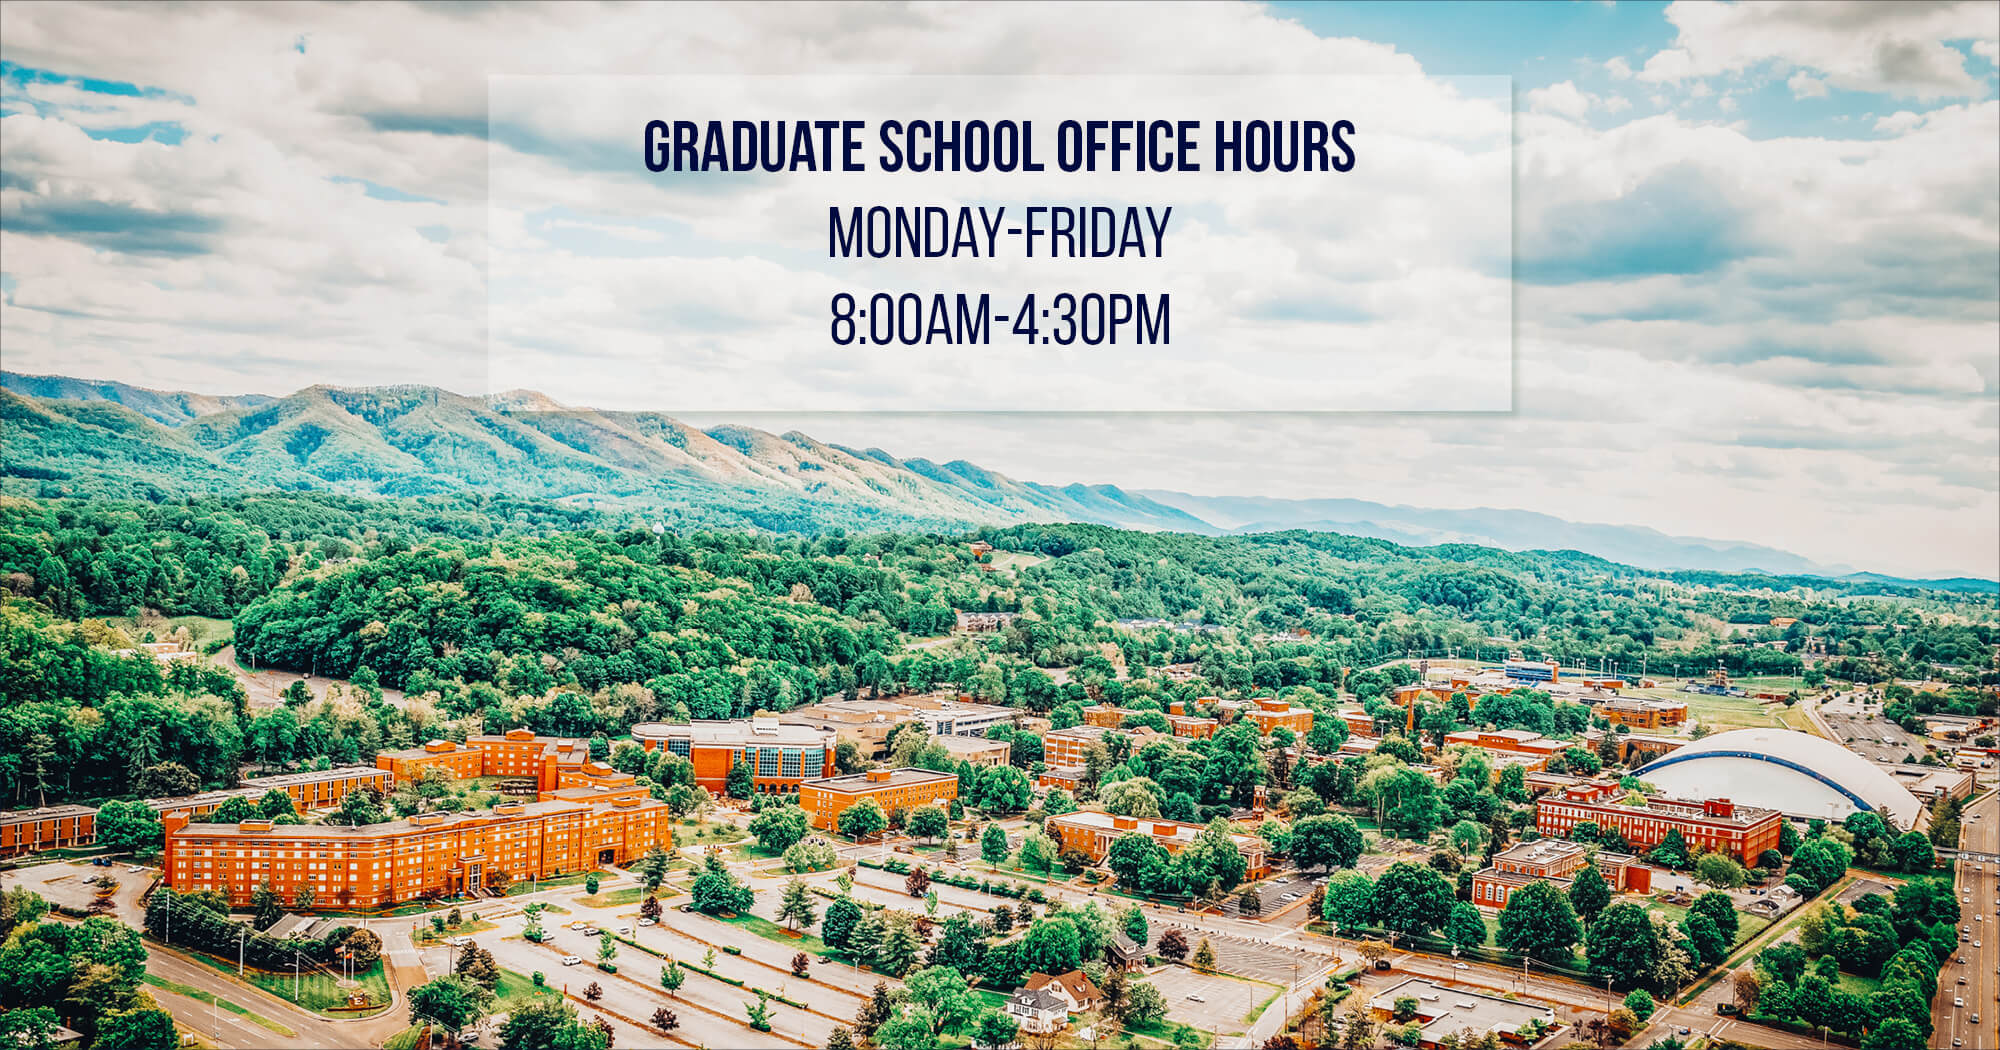 Graduate School Office Hours
Mon-Fri 8AM-4:30 PM